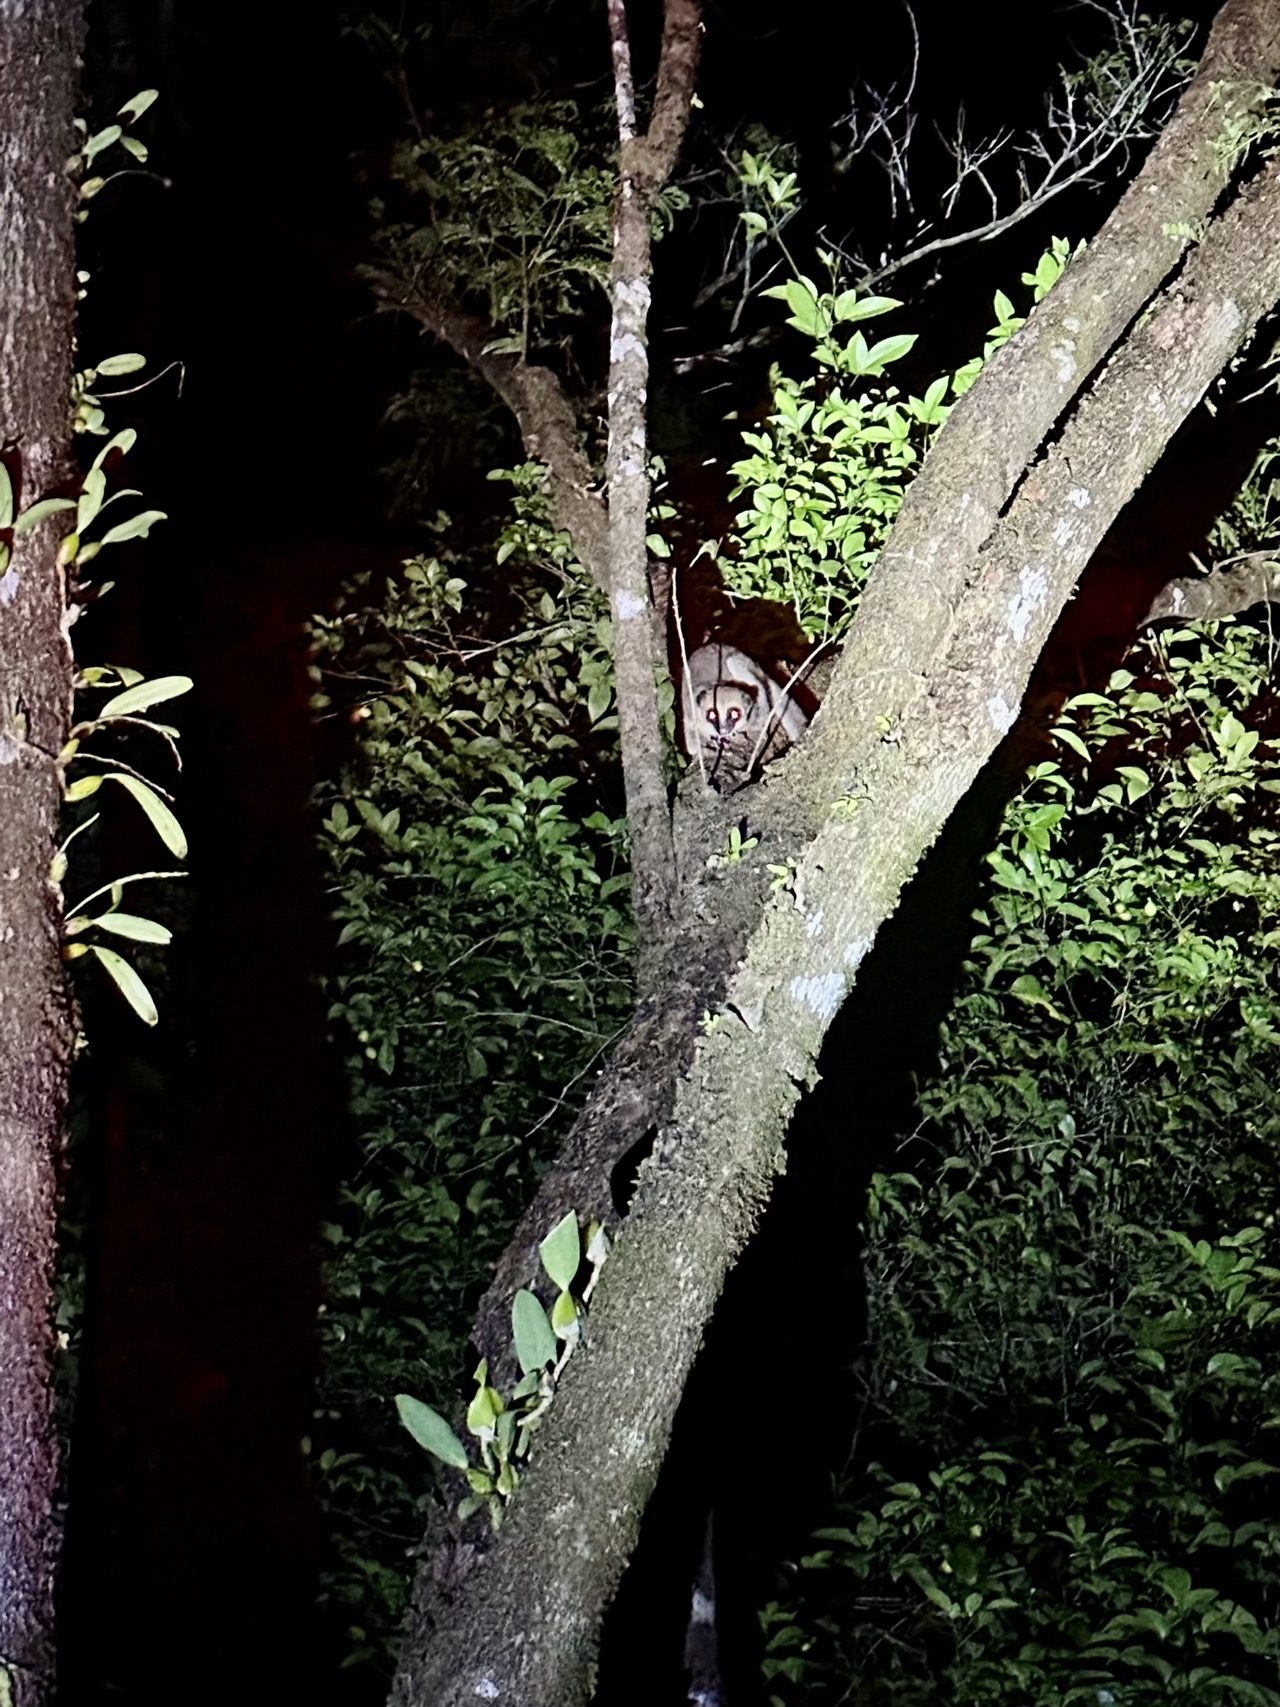 A lemur at night